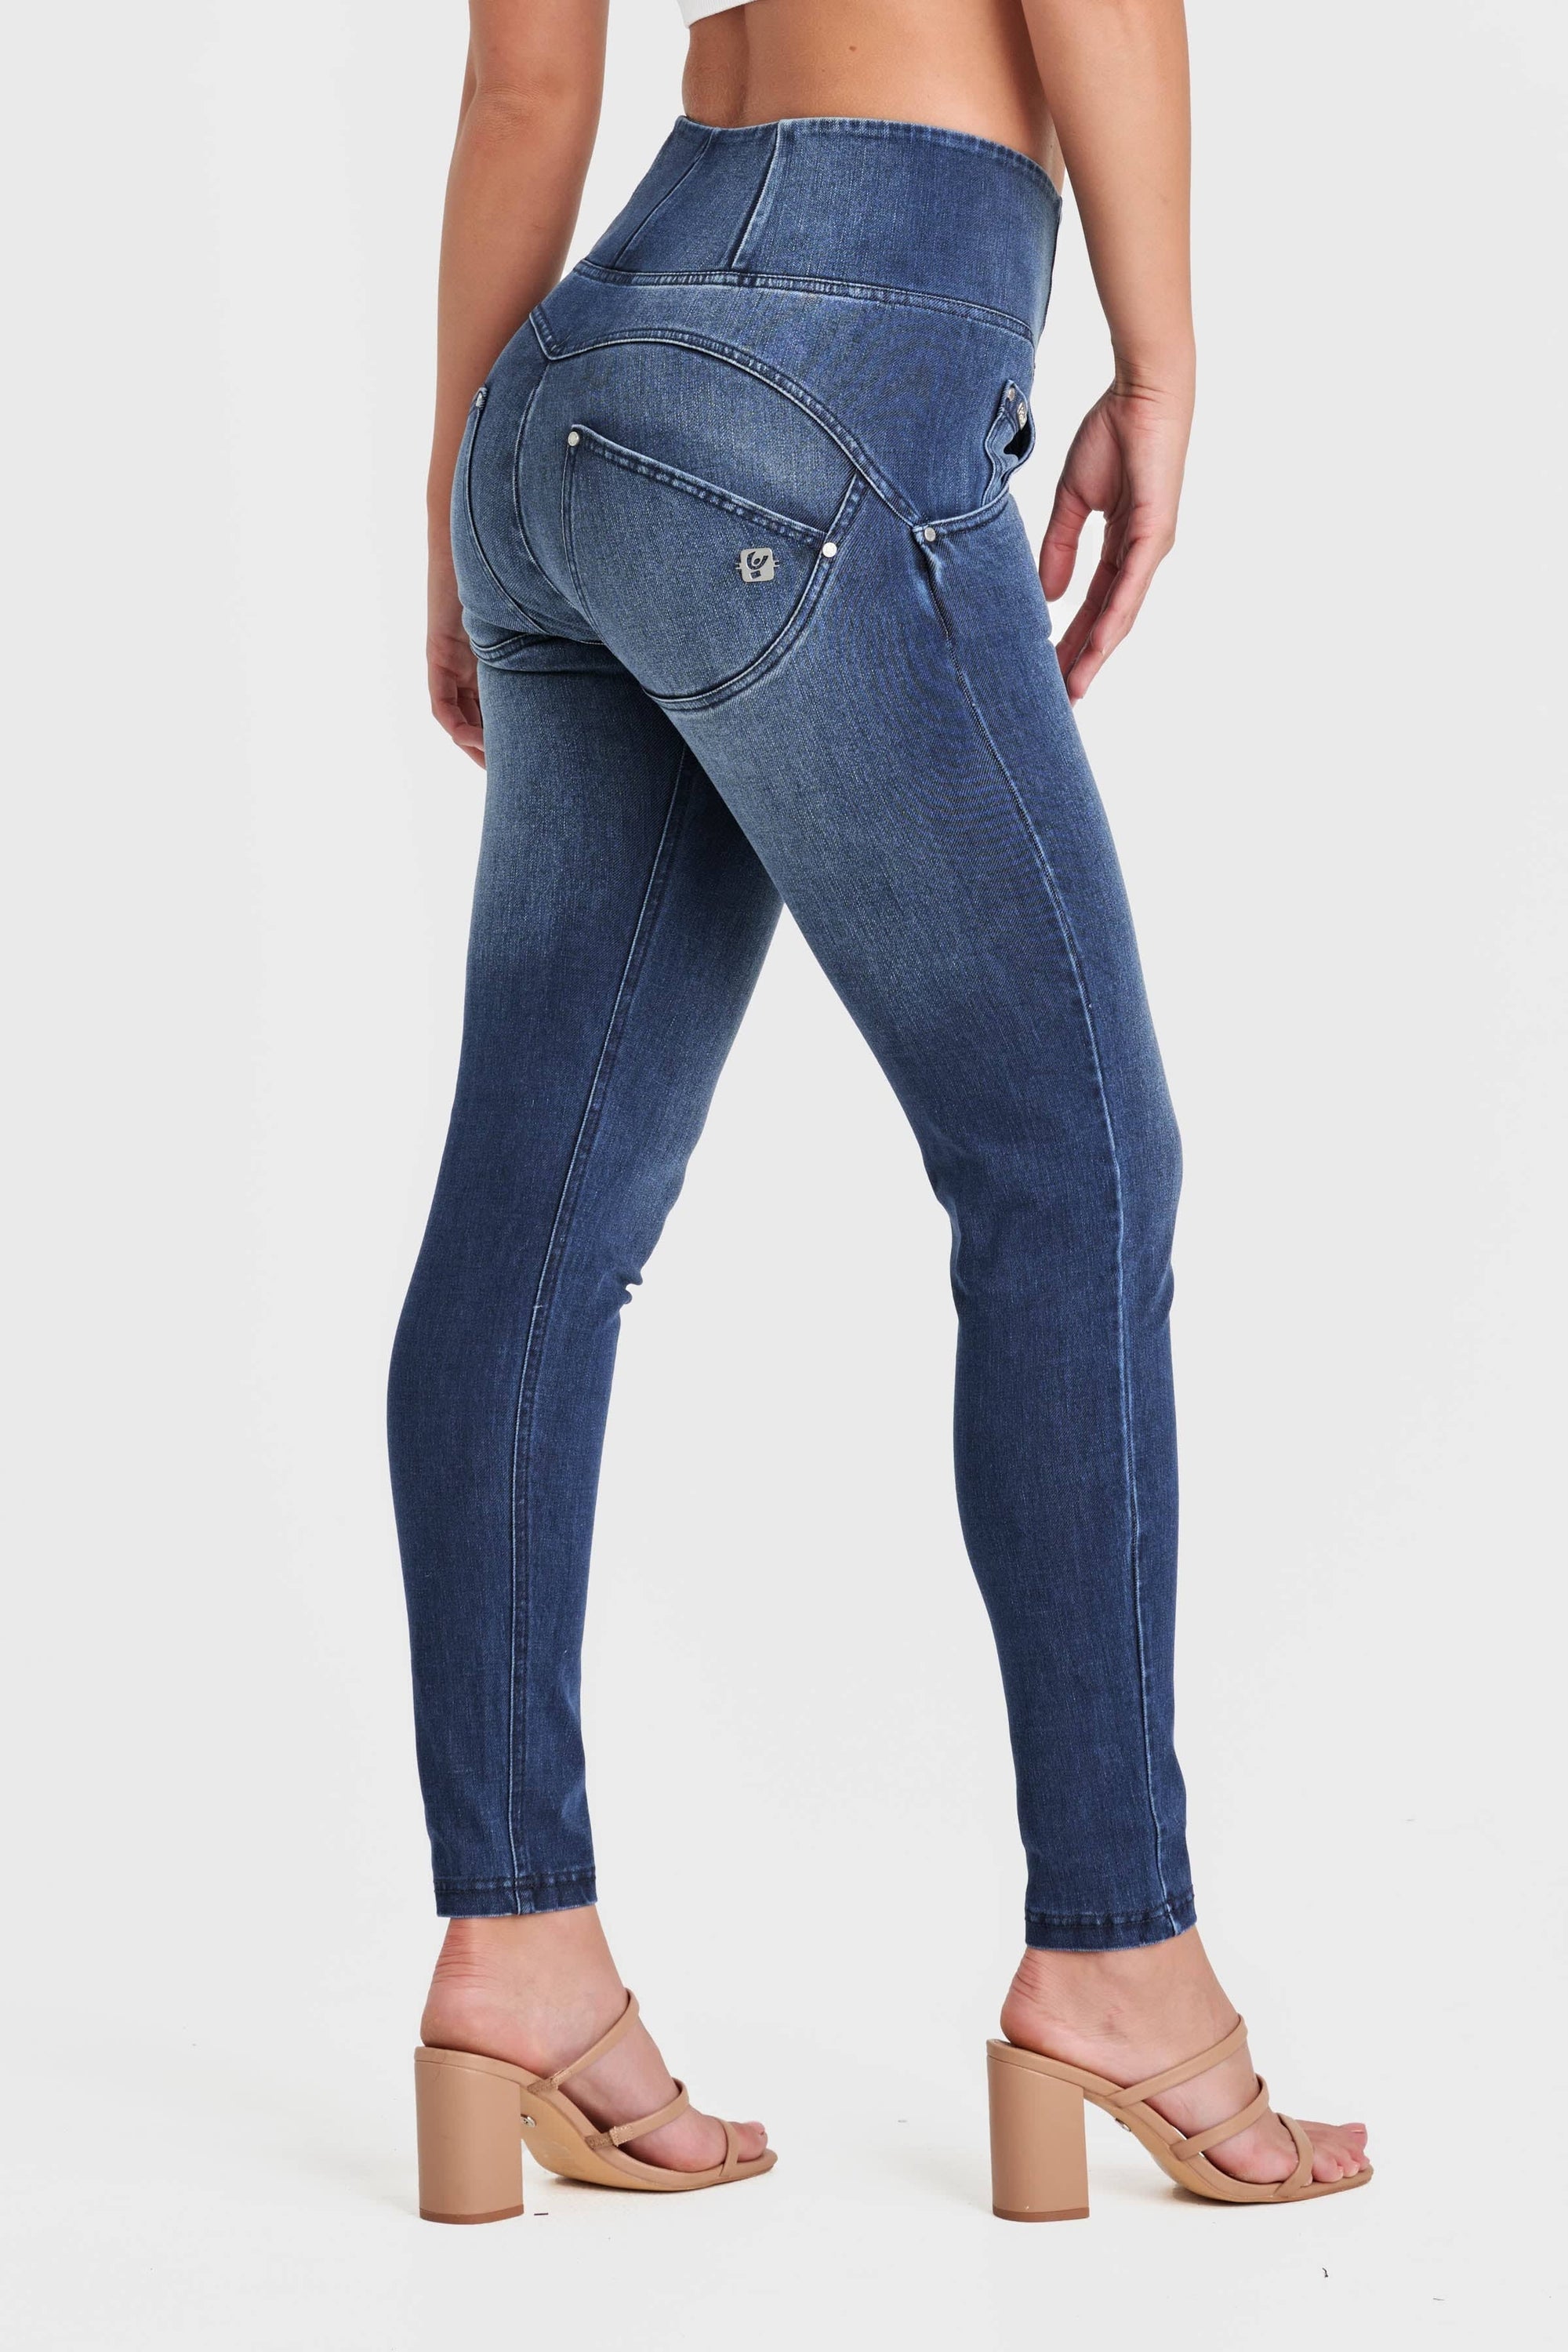 WR.UP® Snug Jeans - High Waisted - Full Length - Dark Blue + Blue Stitching 5